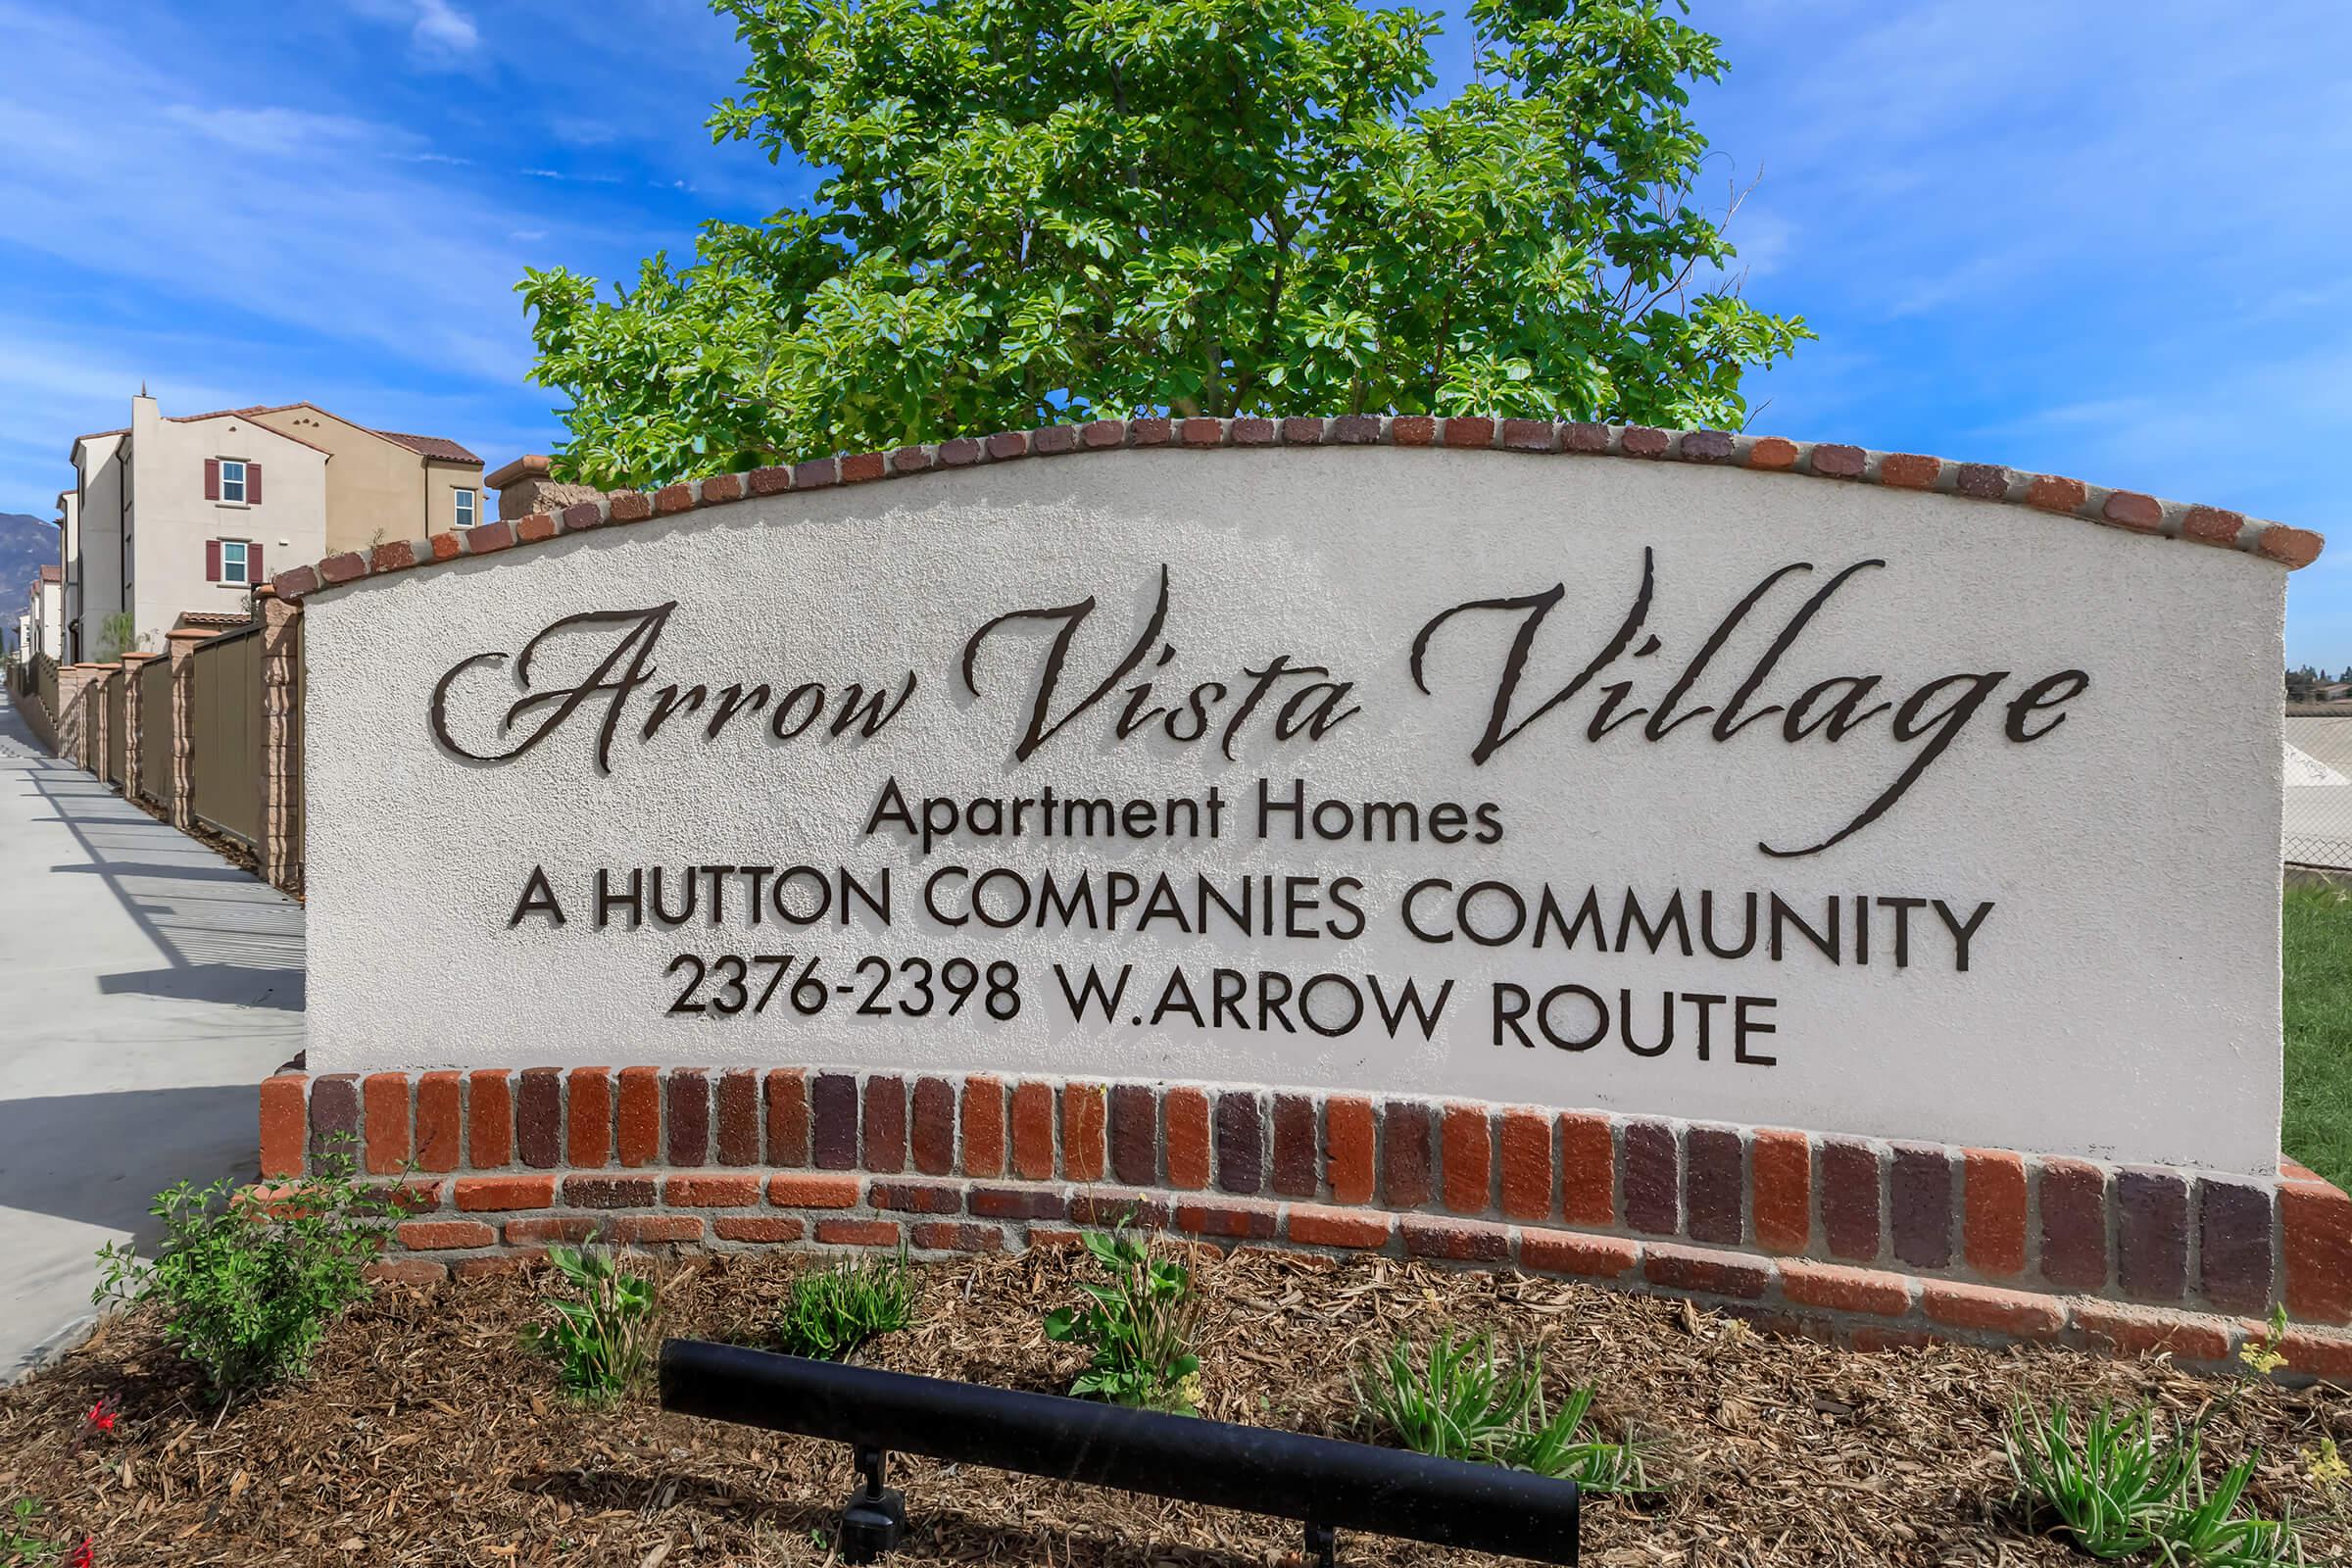 Arrow Vista Village Apartment Homes monument sign